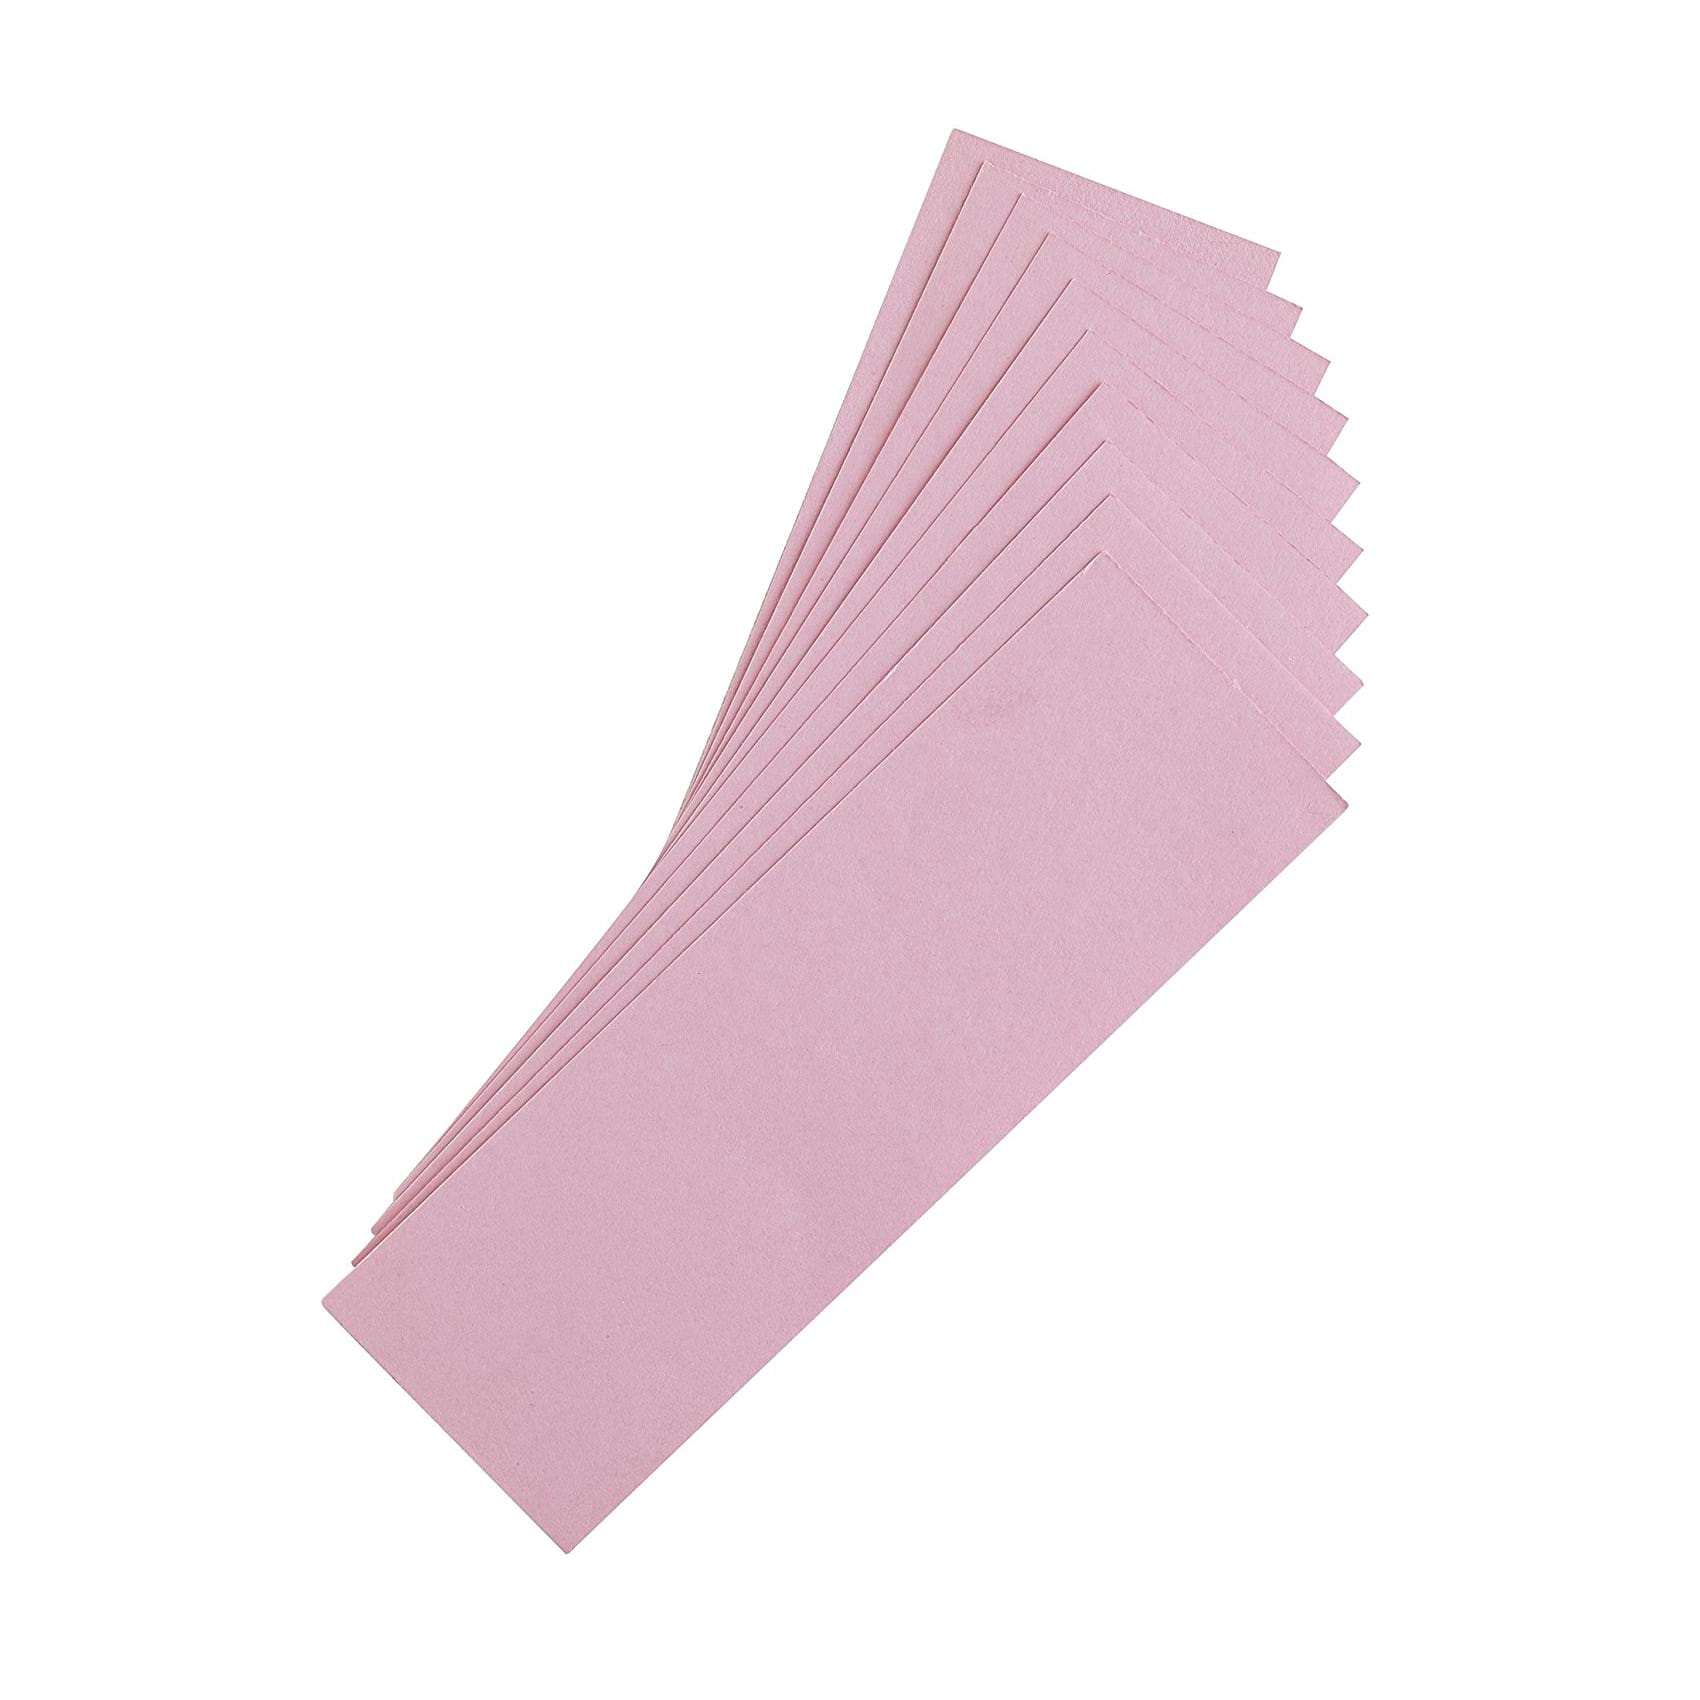 J Herbin 10 Pink Blotting Paper Pad Refill Cut For Desk Blotter